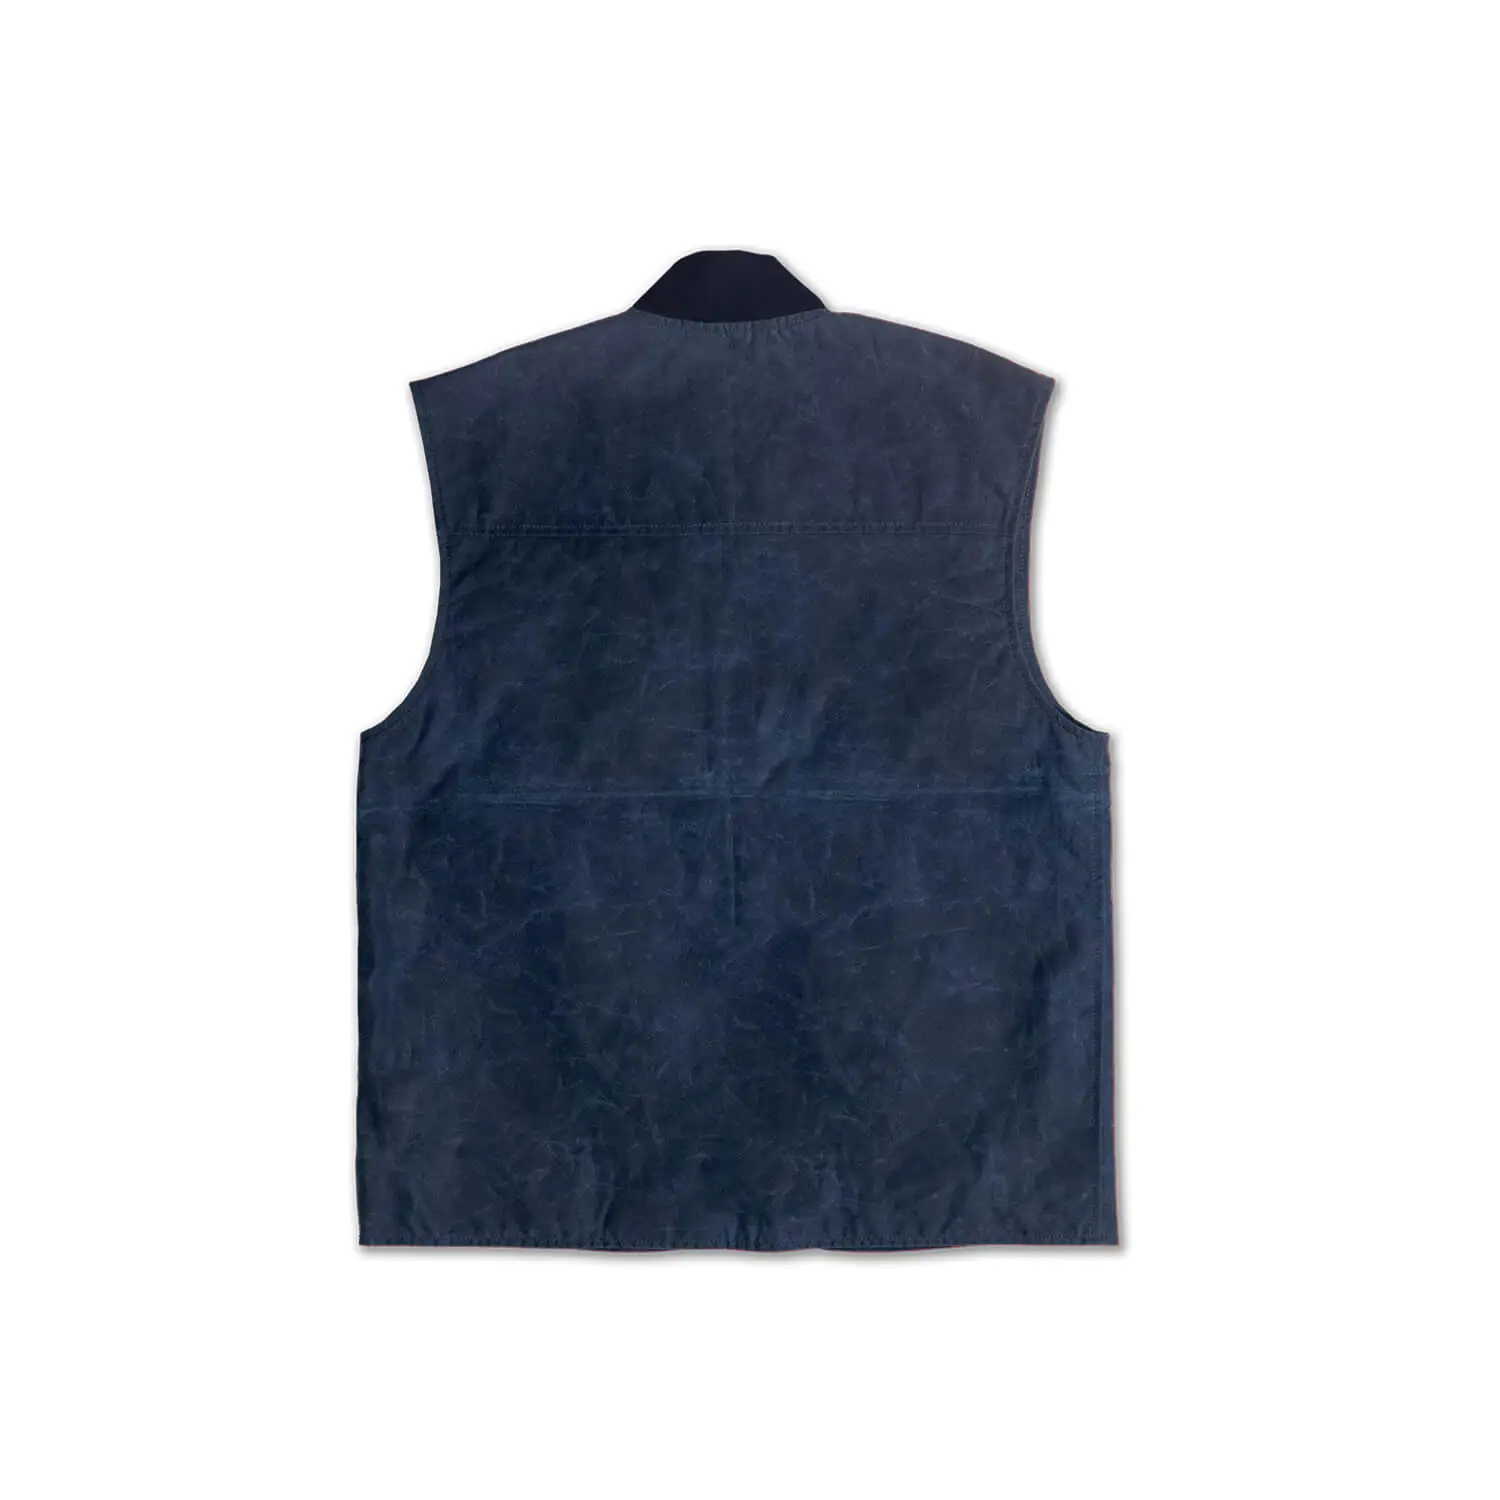 dmd.eu - CHALECO BLUE DMD – Gilet blue cotton waxed – back